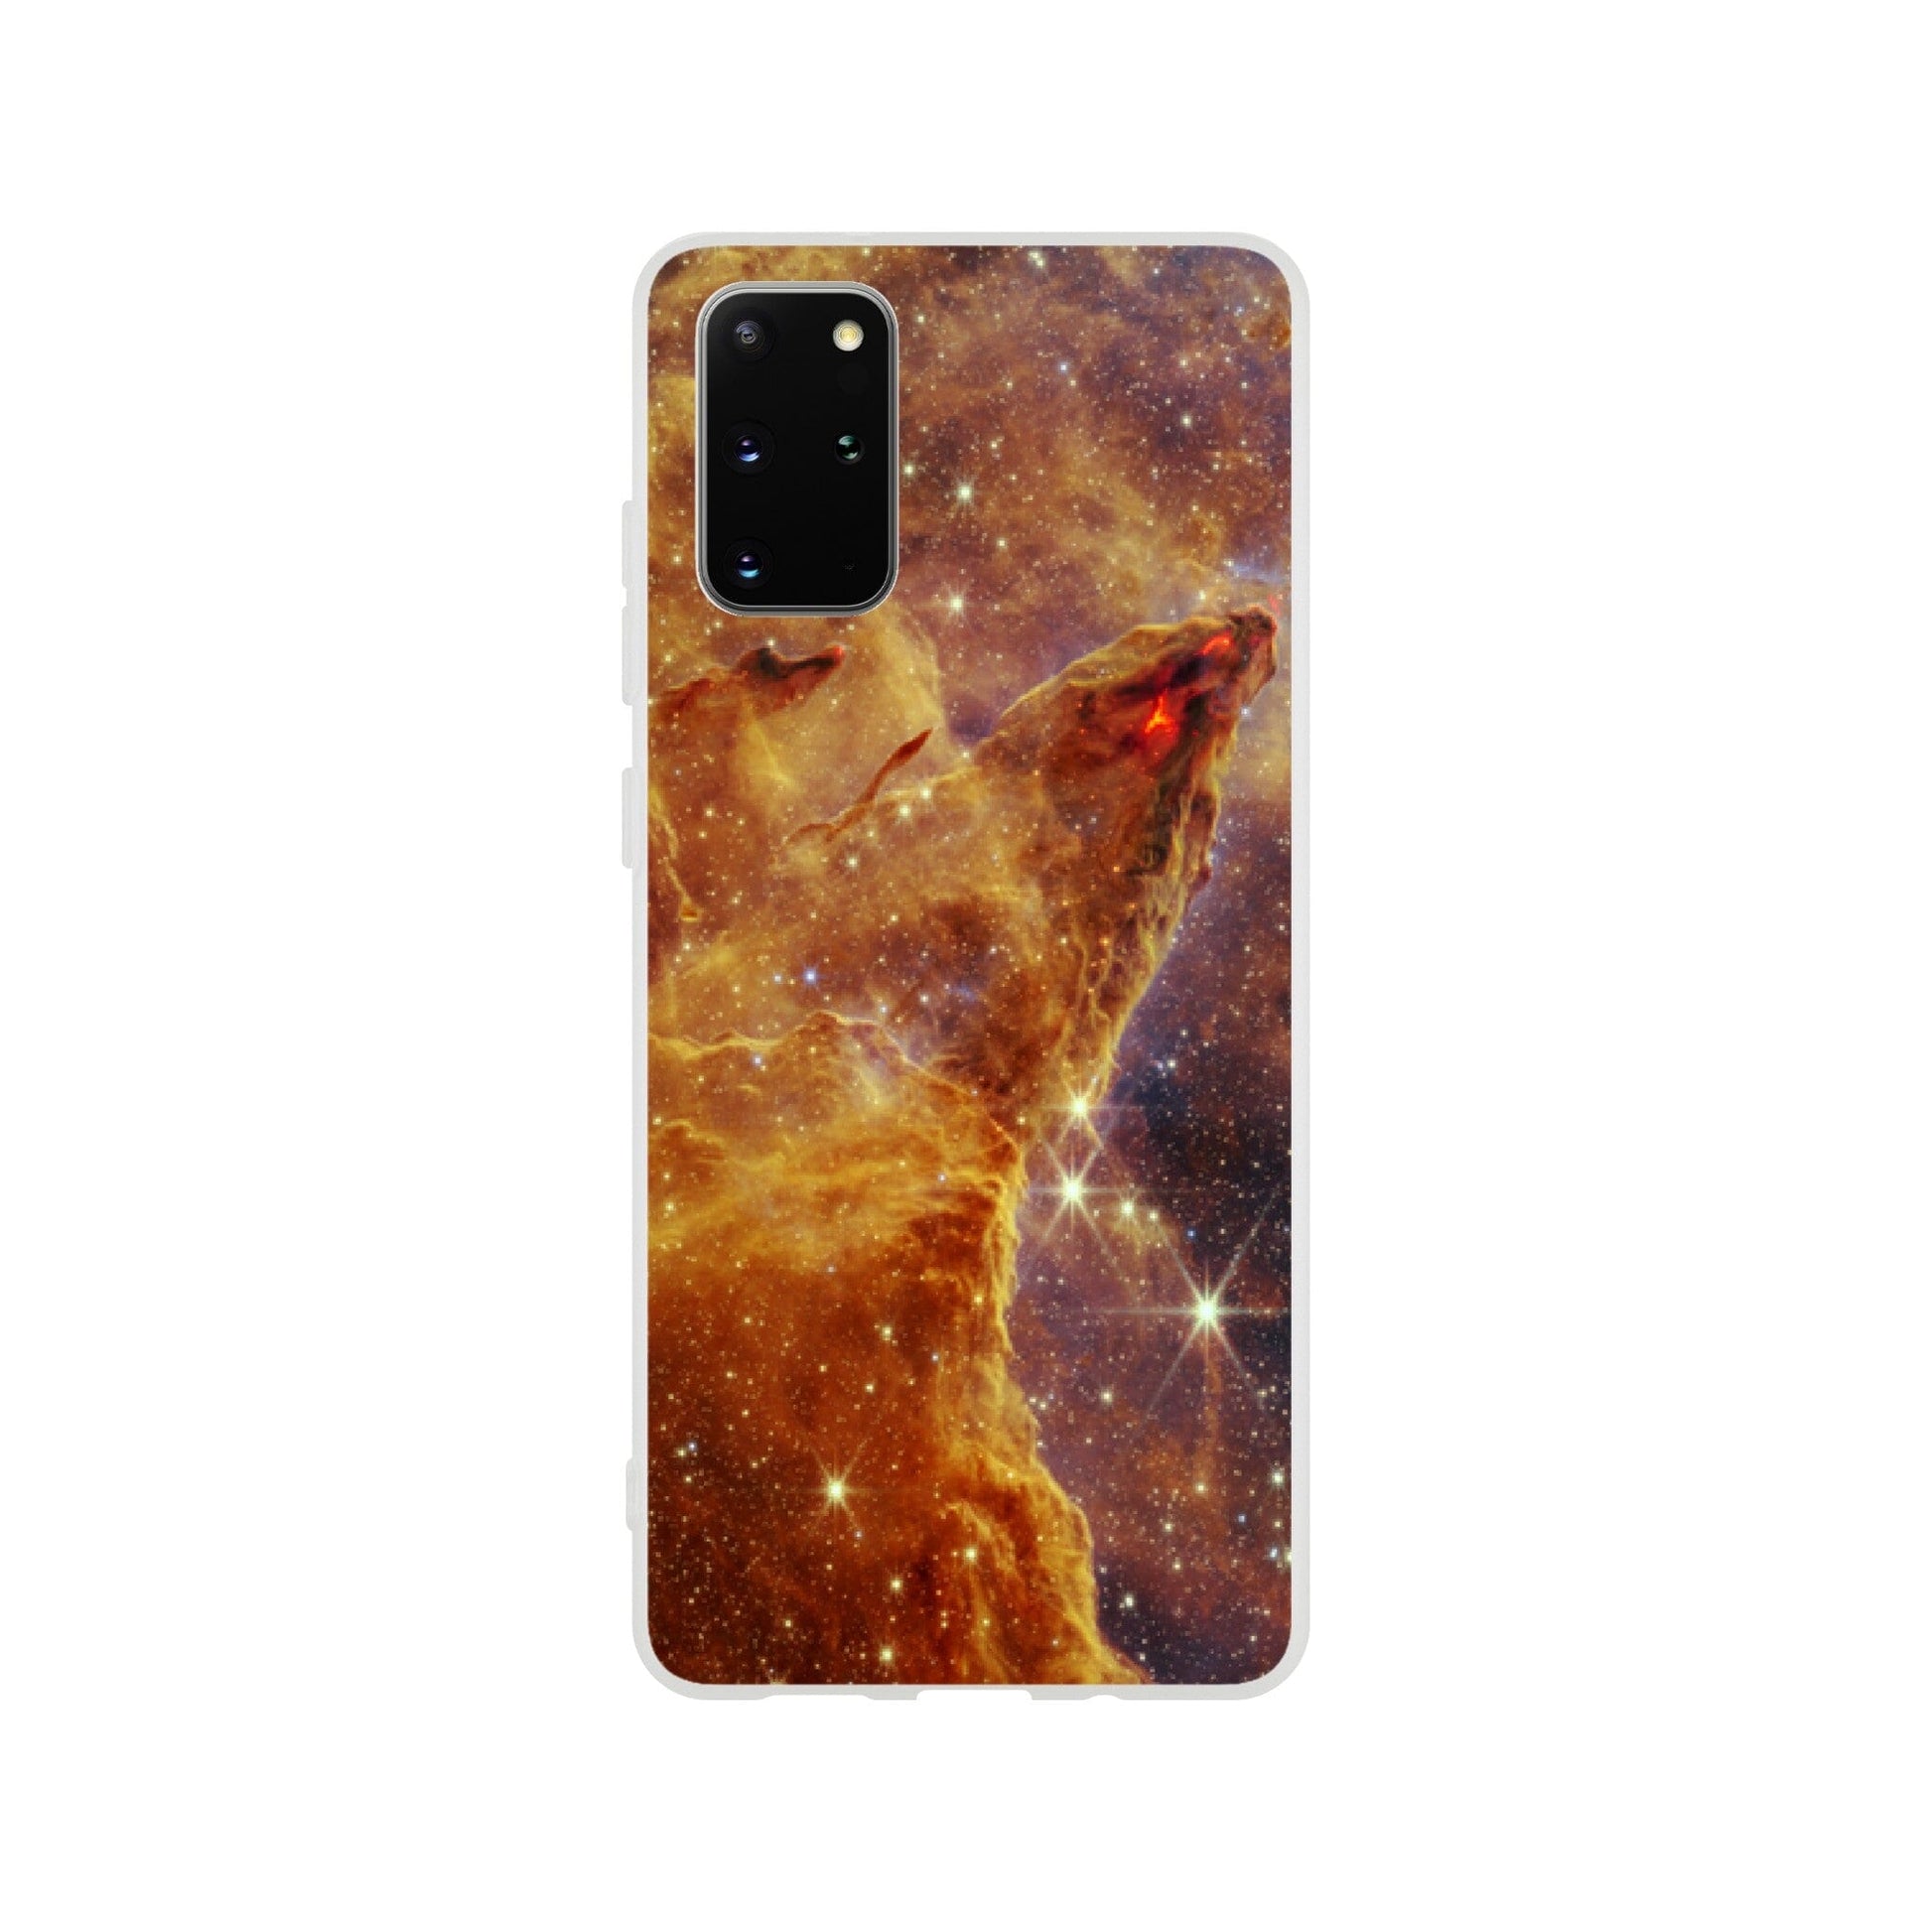 NASA - Phone Case Flexi - 9. Pillars of Creation (NIRCam Image) - James Webb Space Telescope Phone Case TP Aviation Art Galaxy S20 Plus 